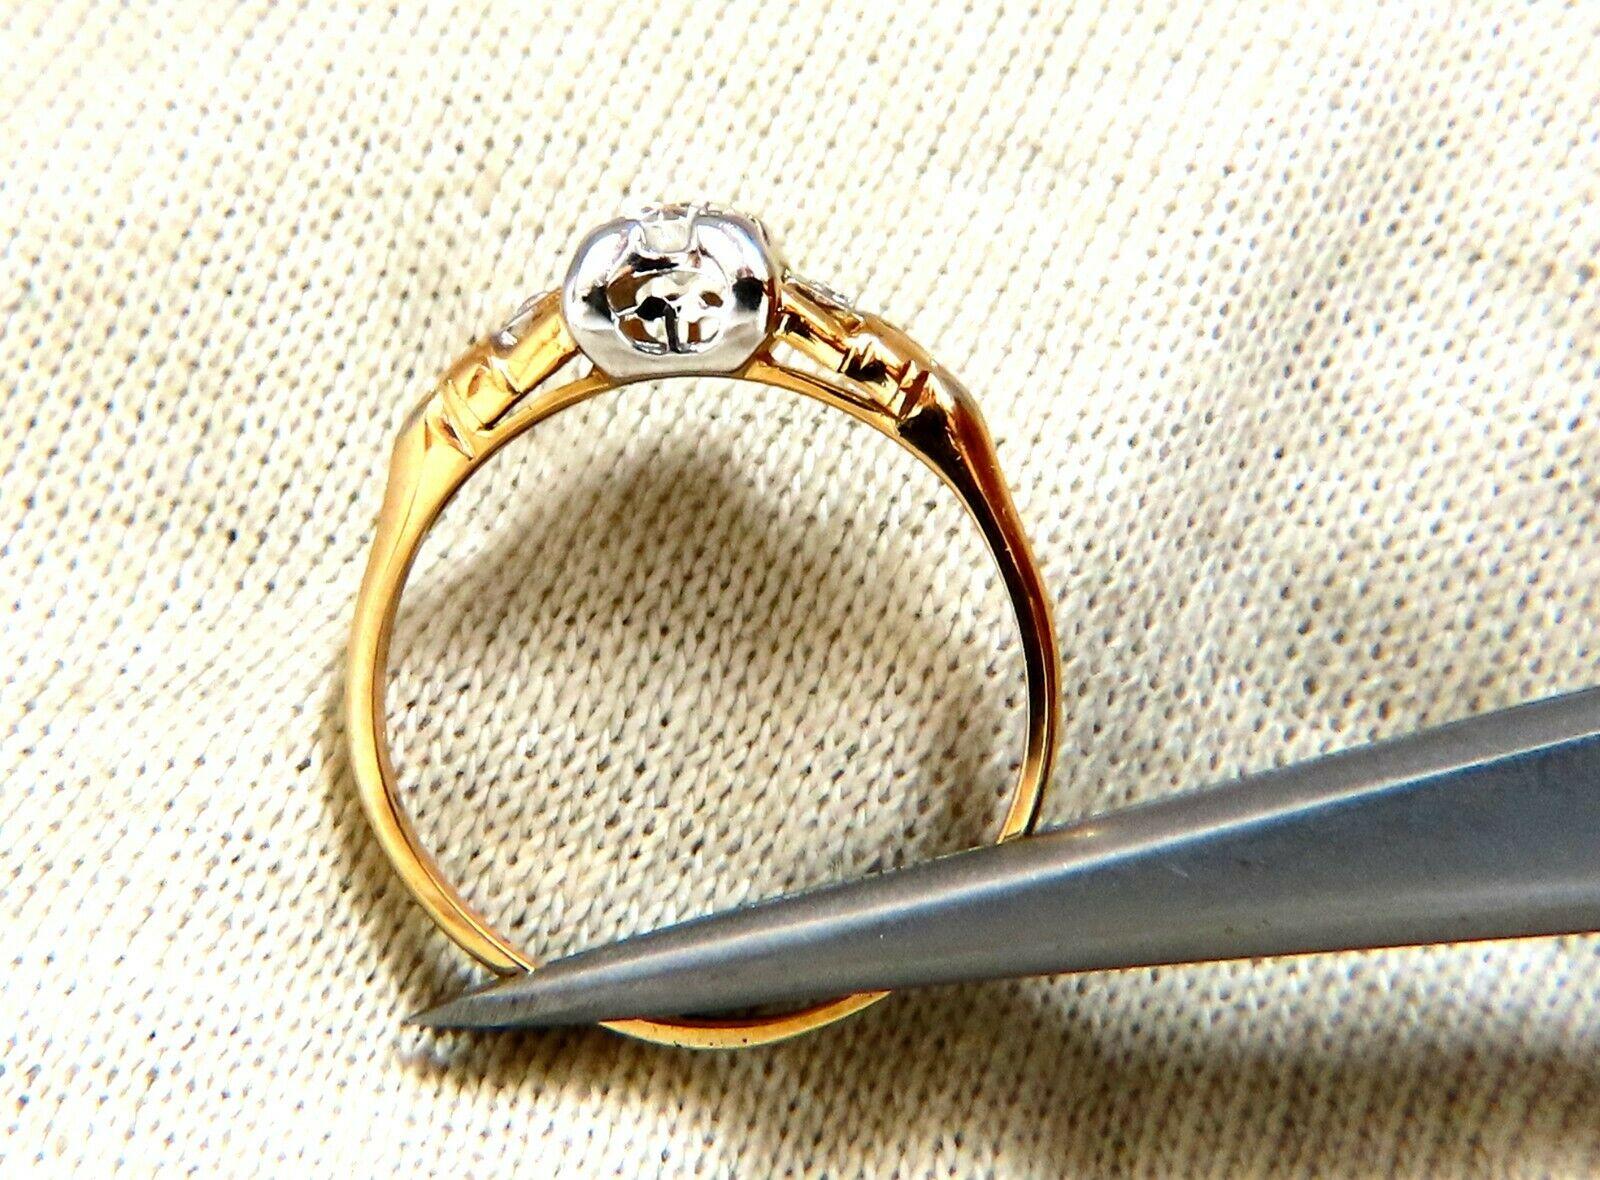 30ct diamond ring